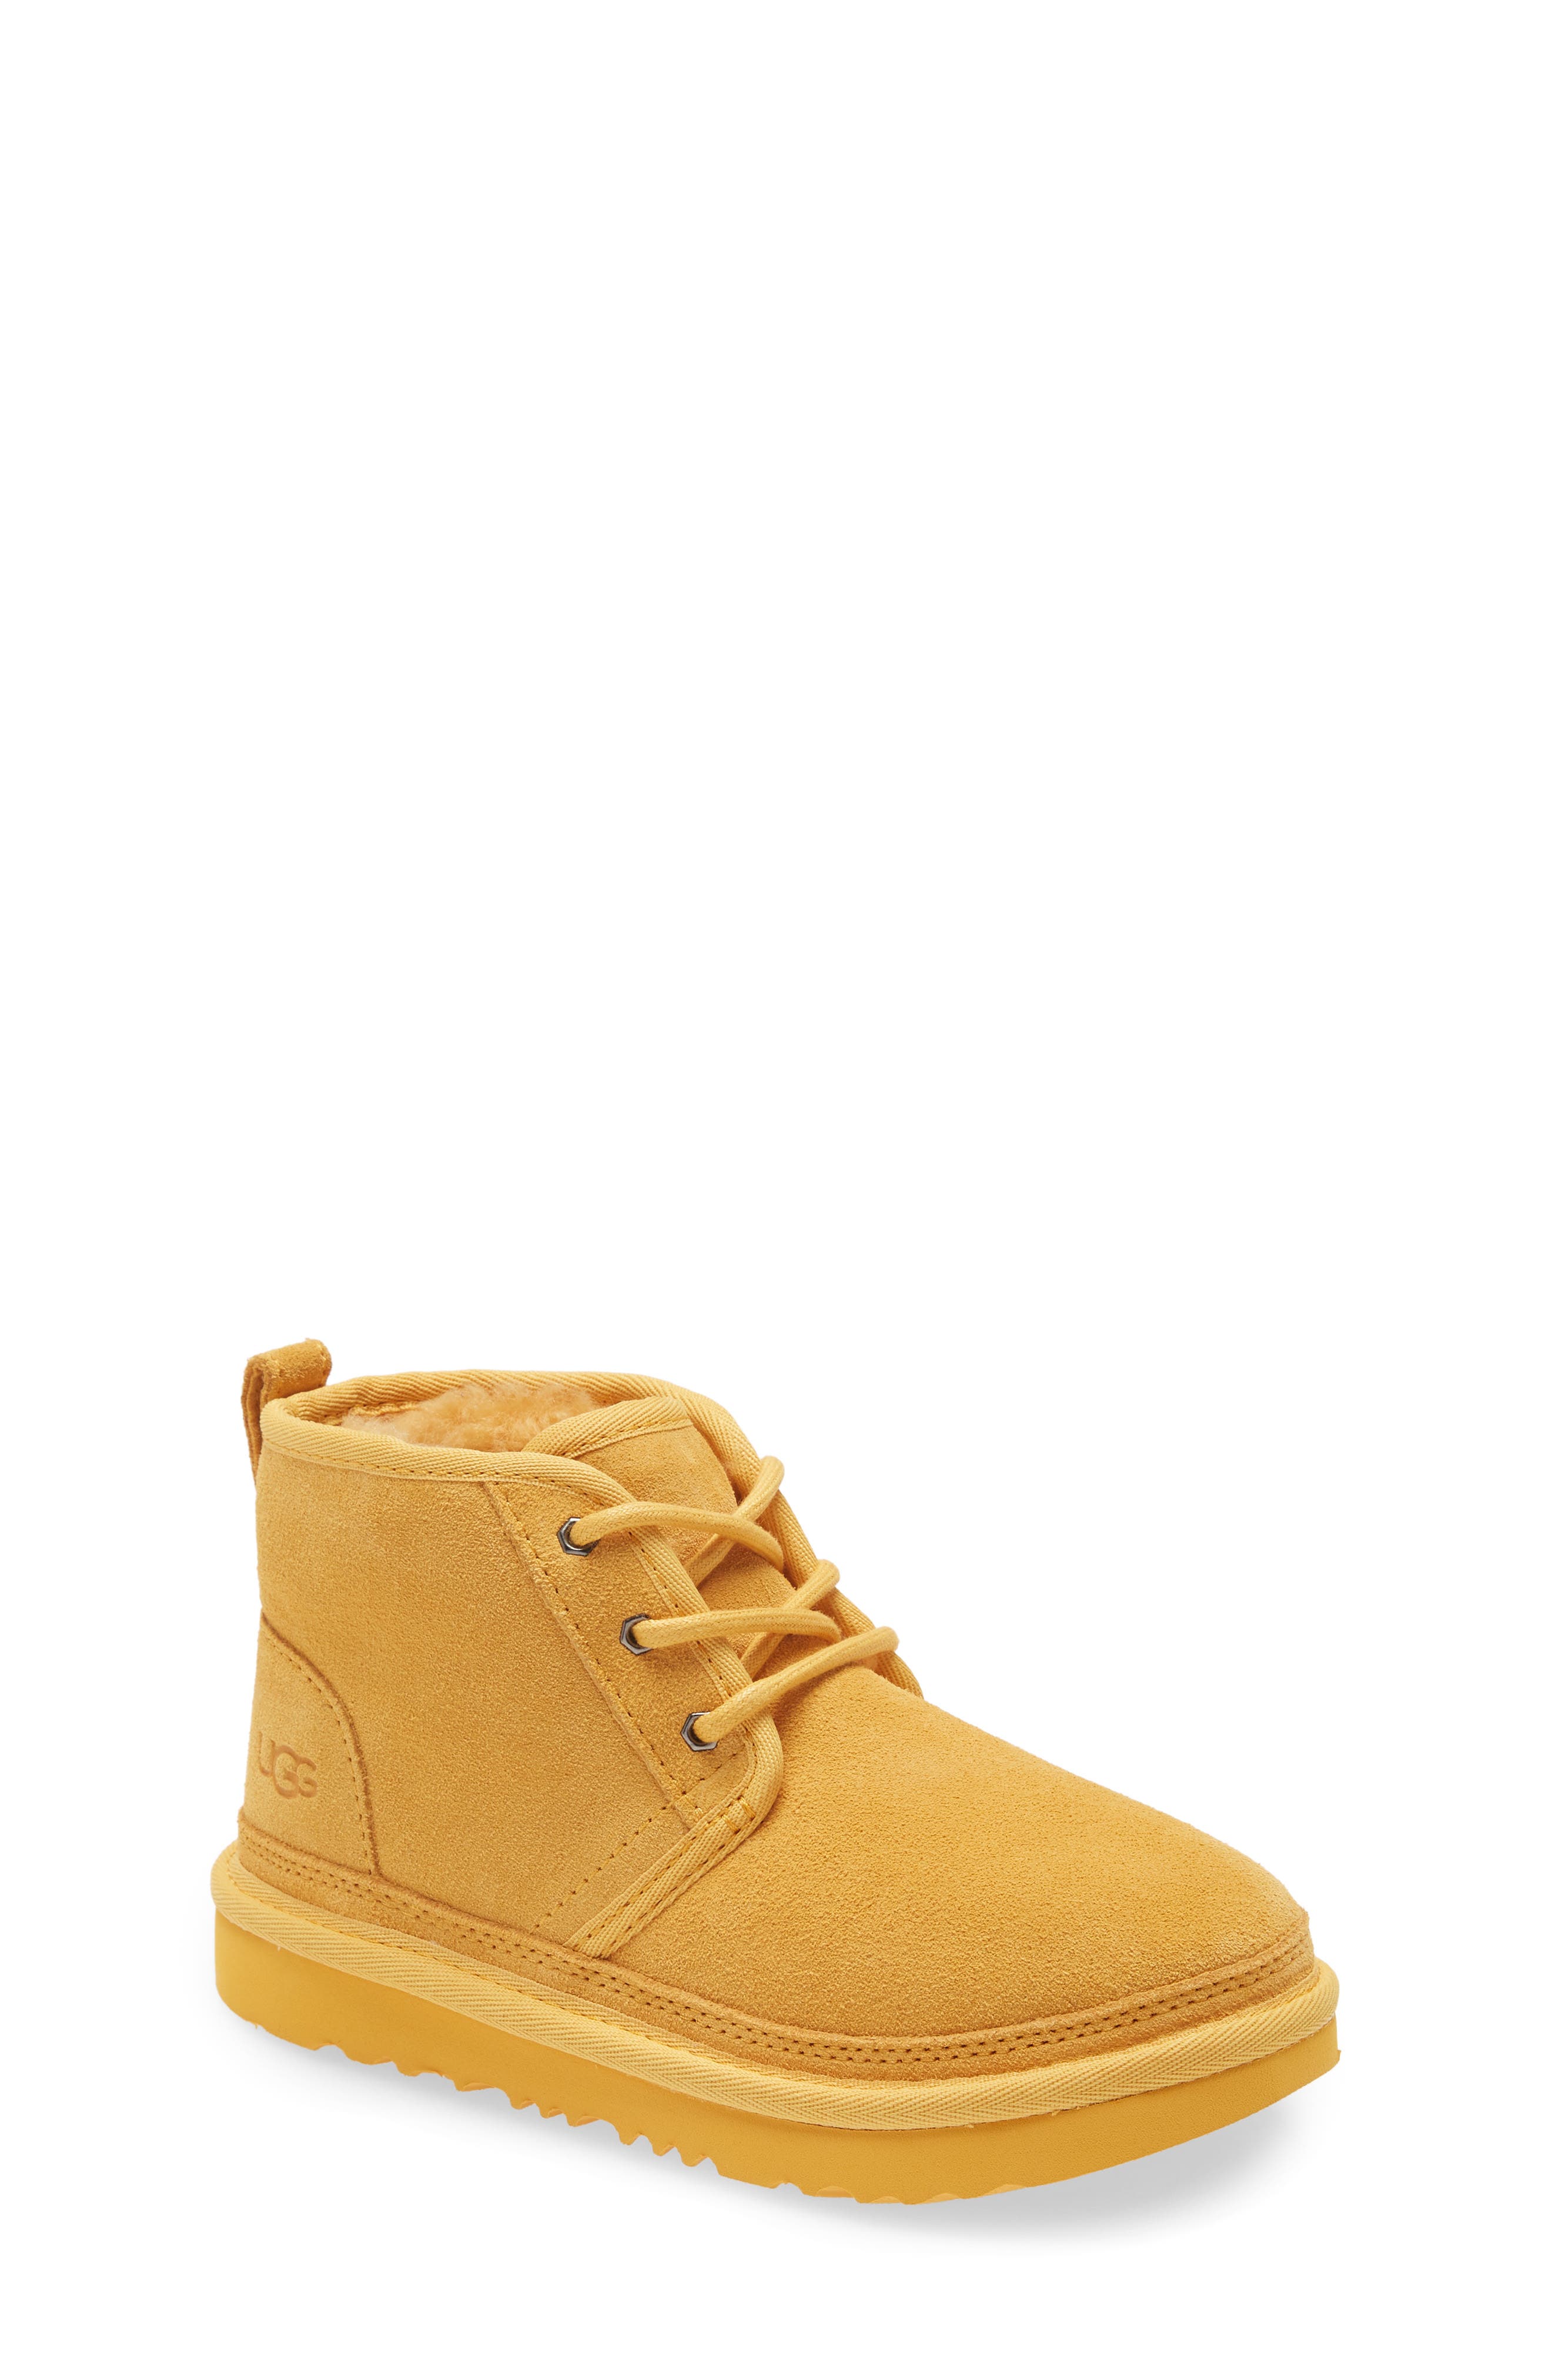 yellow ugg sneakers